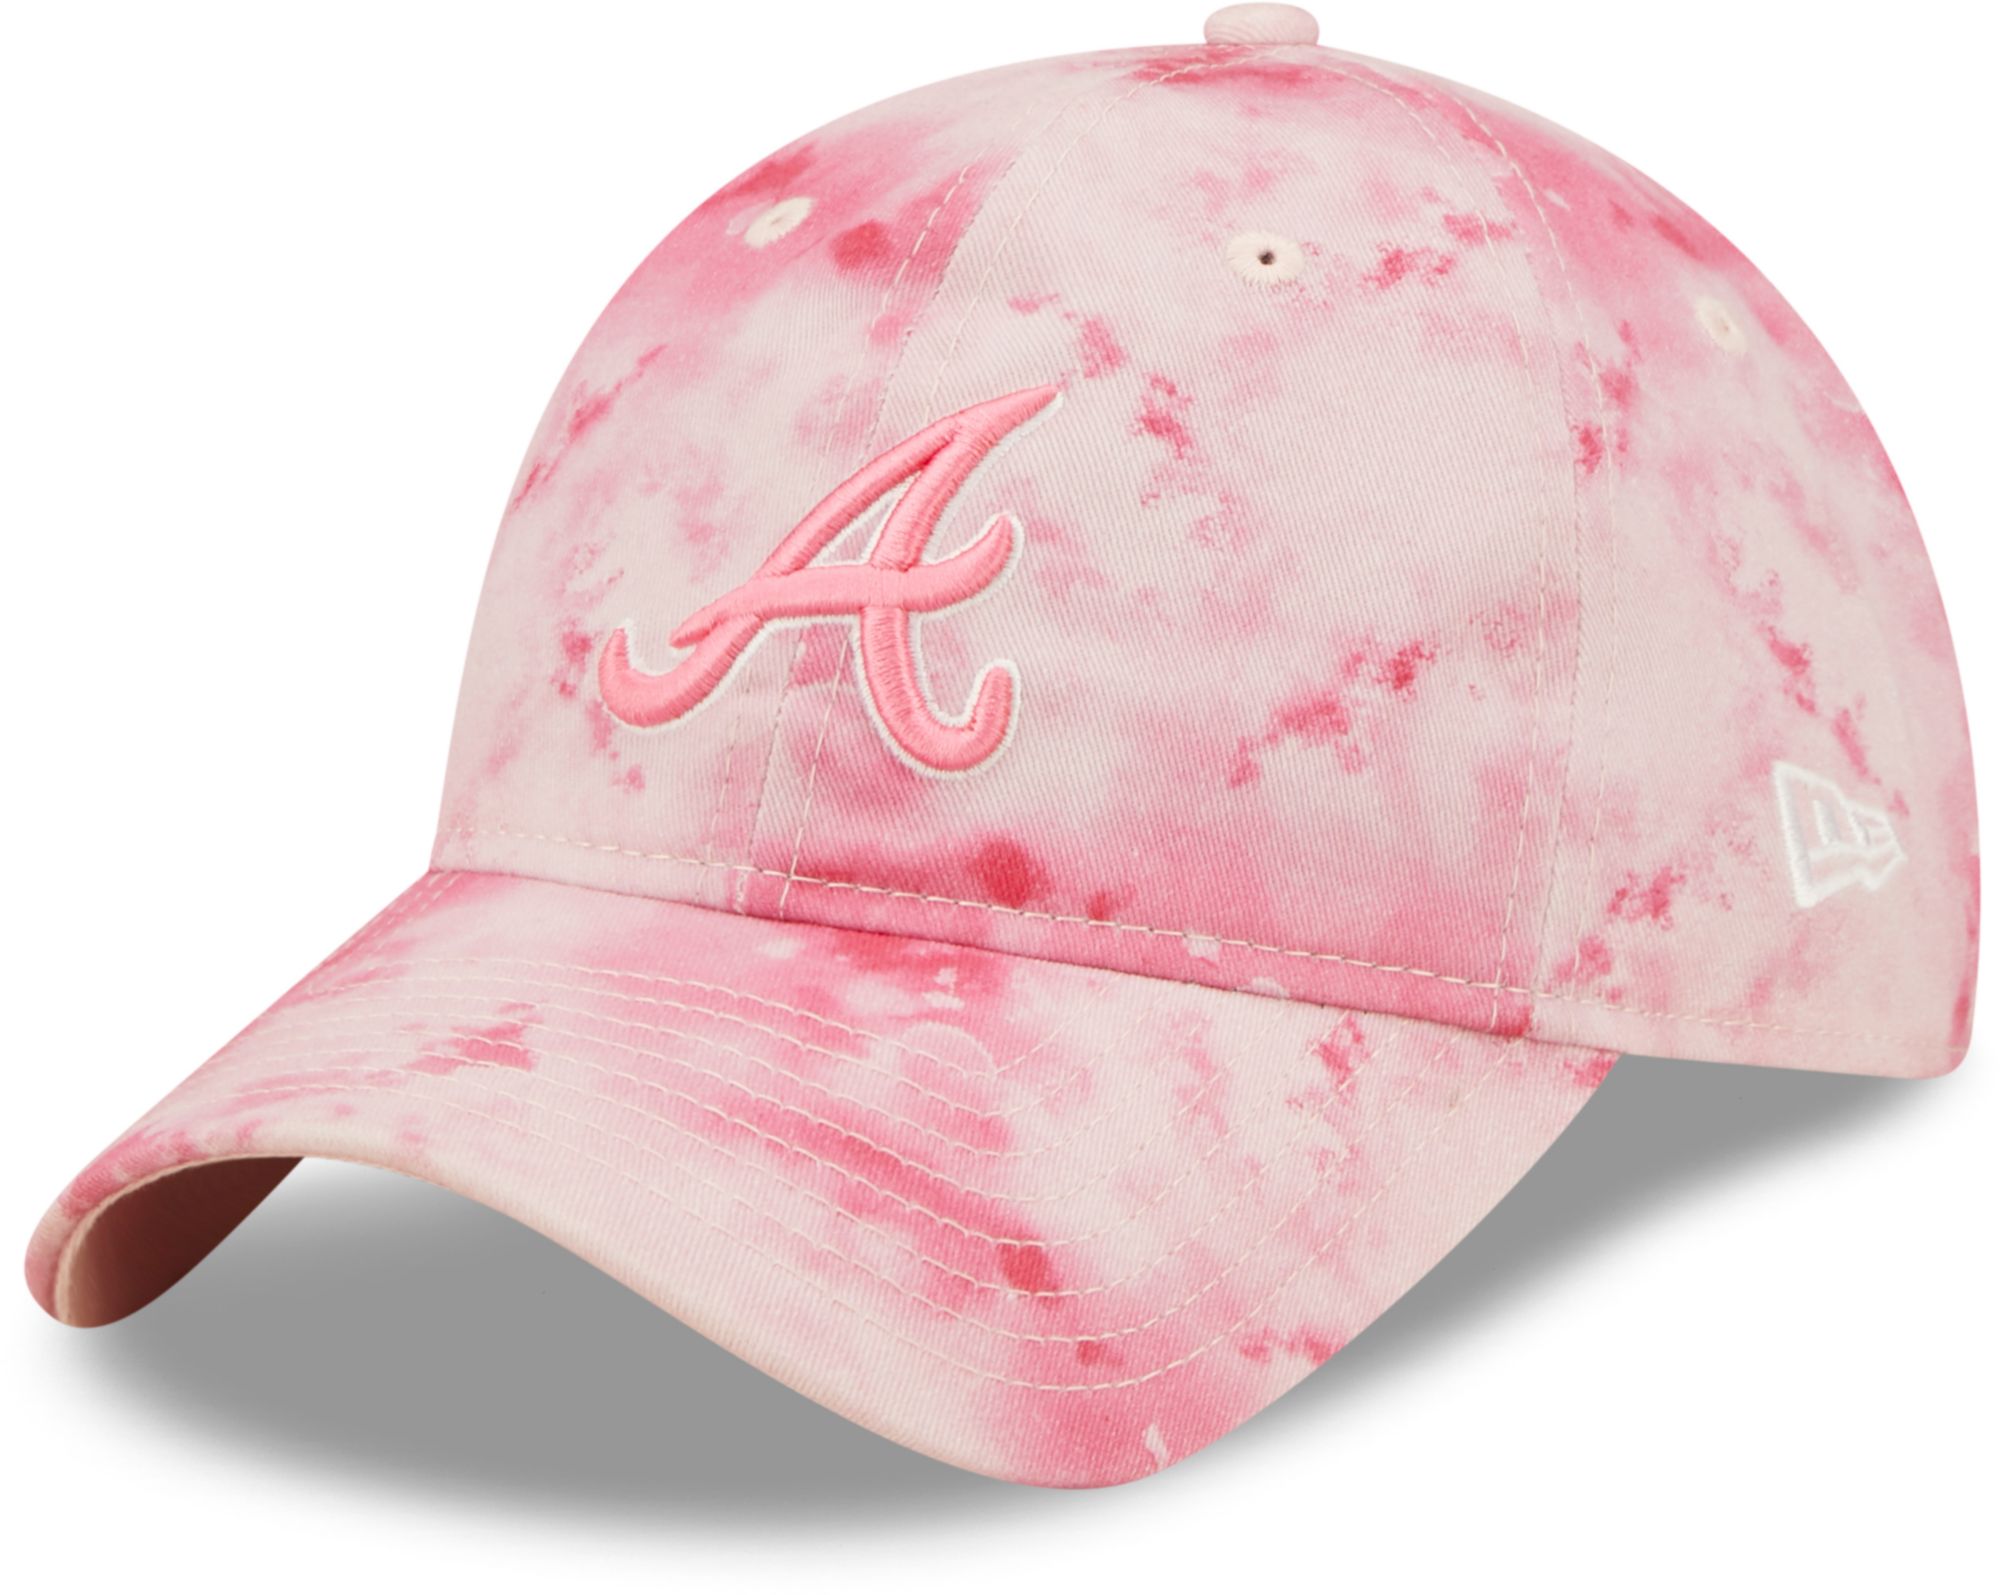 New Era Girl's Atlanta Braves Pink T-Shirt